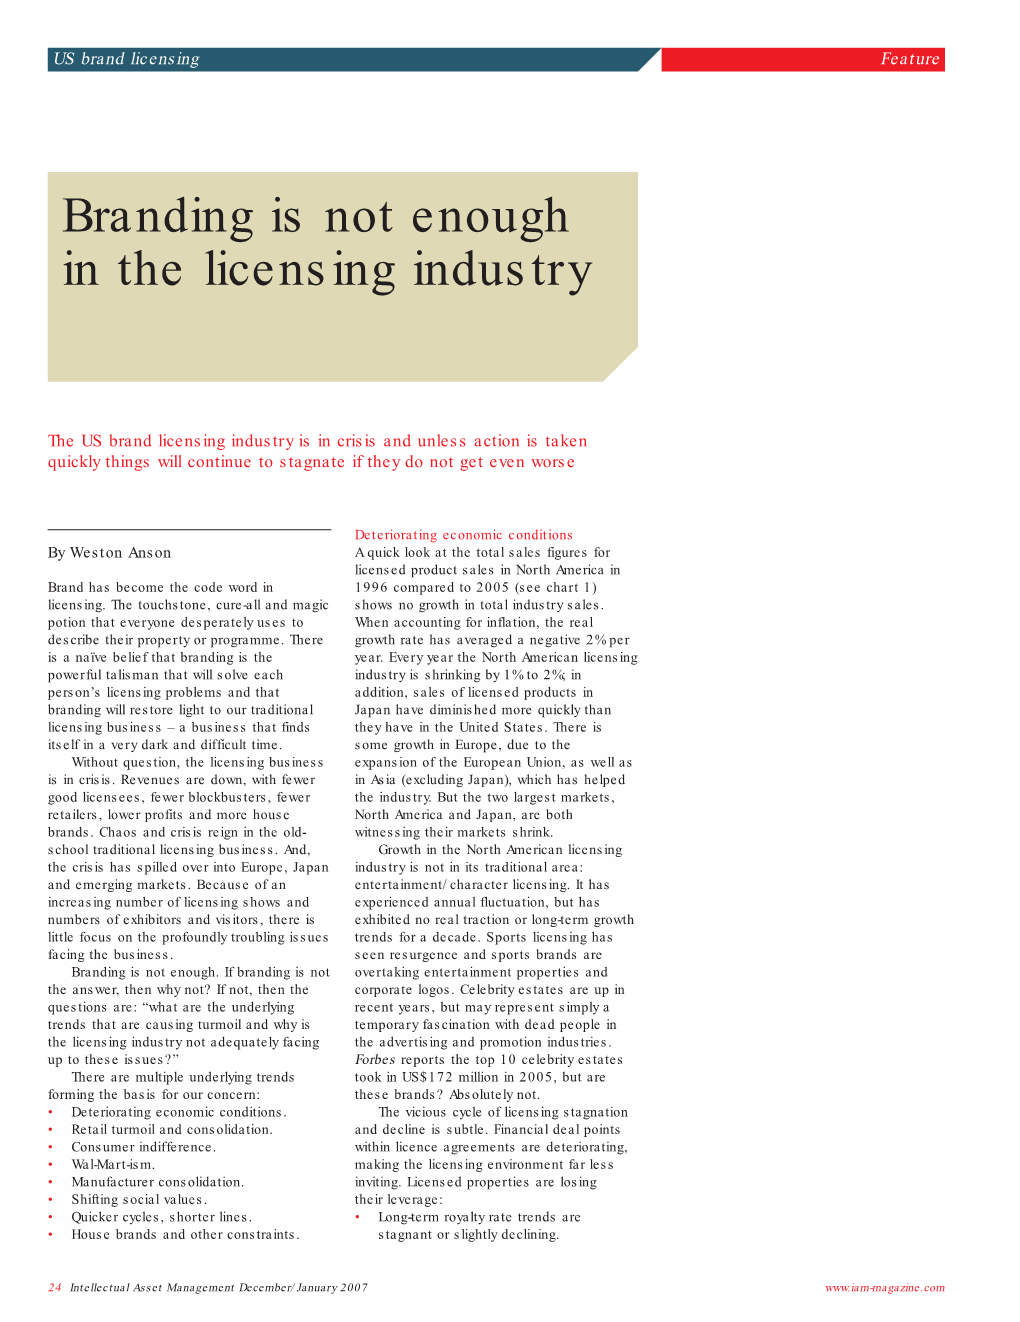 Branding Is Not Enough in the Licensing Industry